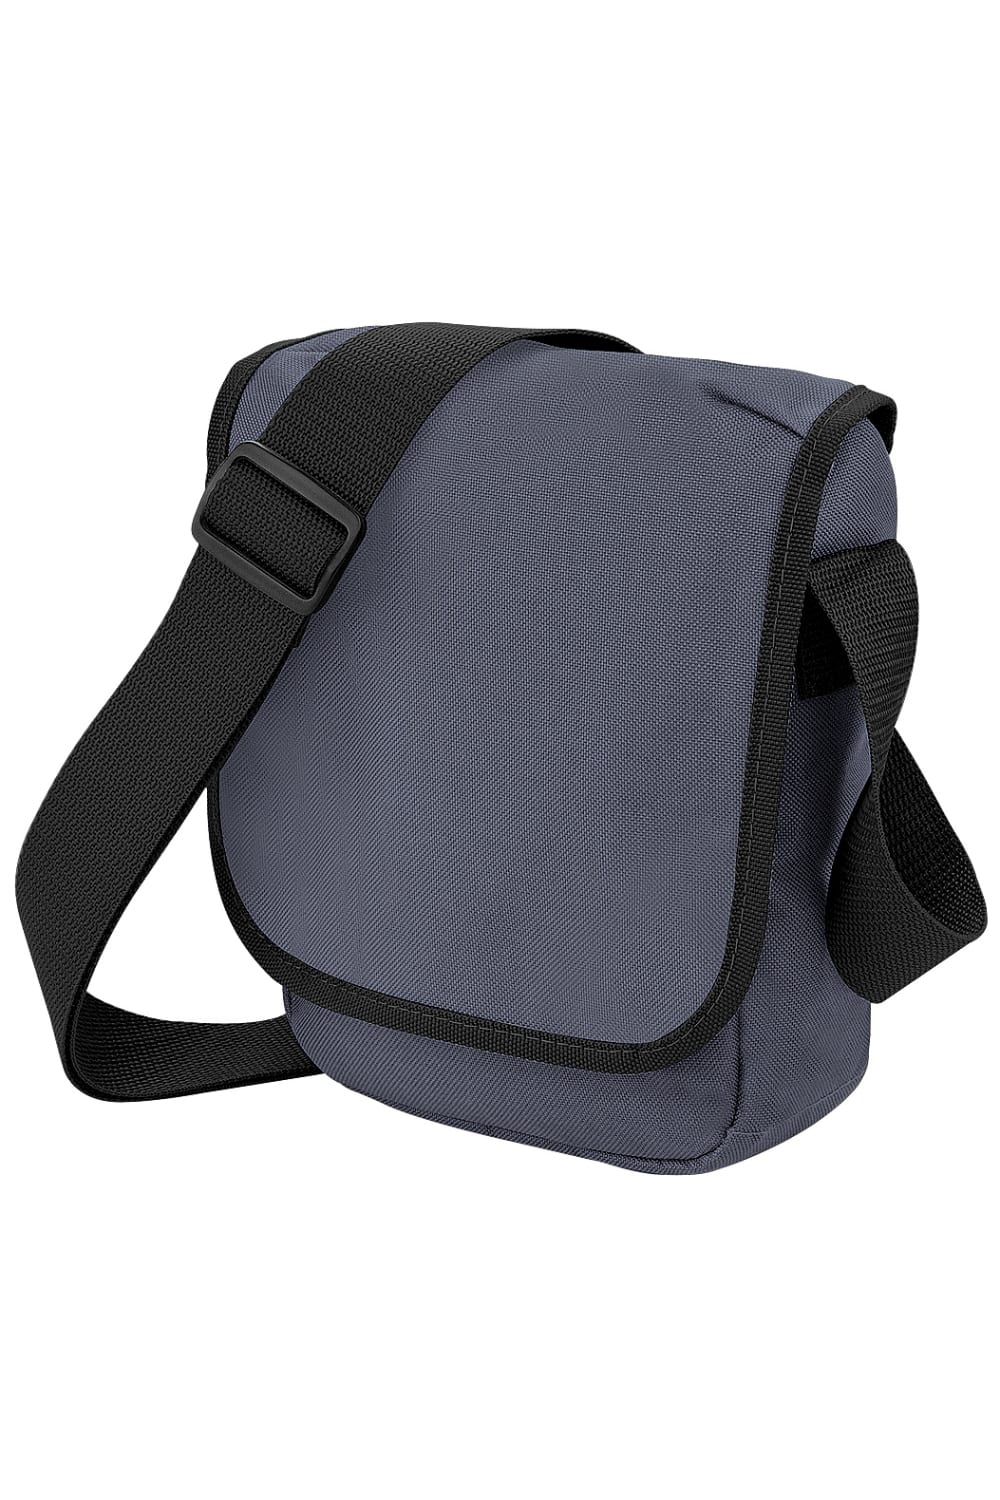 Mini Adjustable Reporter / Messenger Bag 2 Liters Pack Of 2 - Graphite Grey/Black